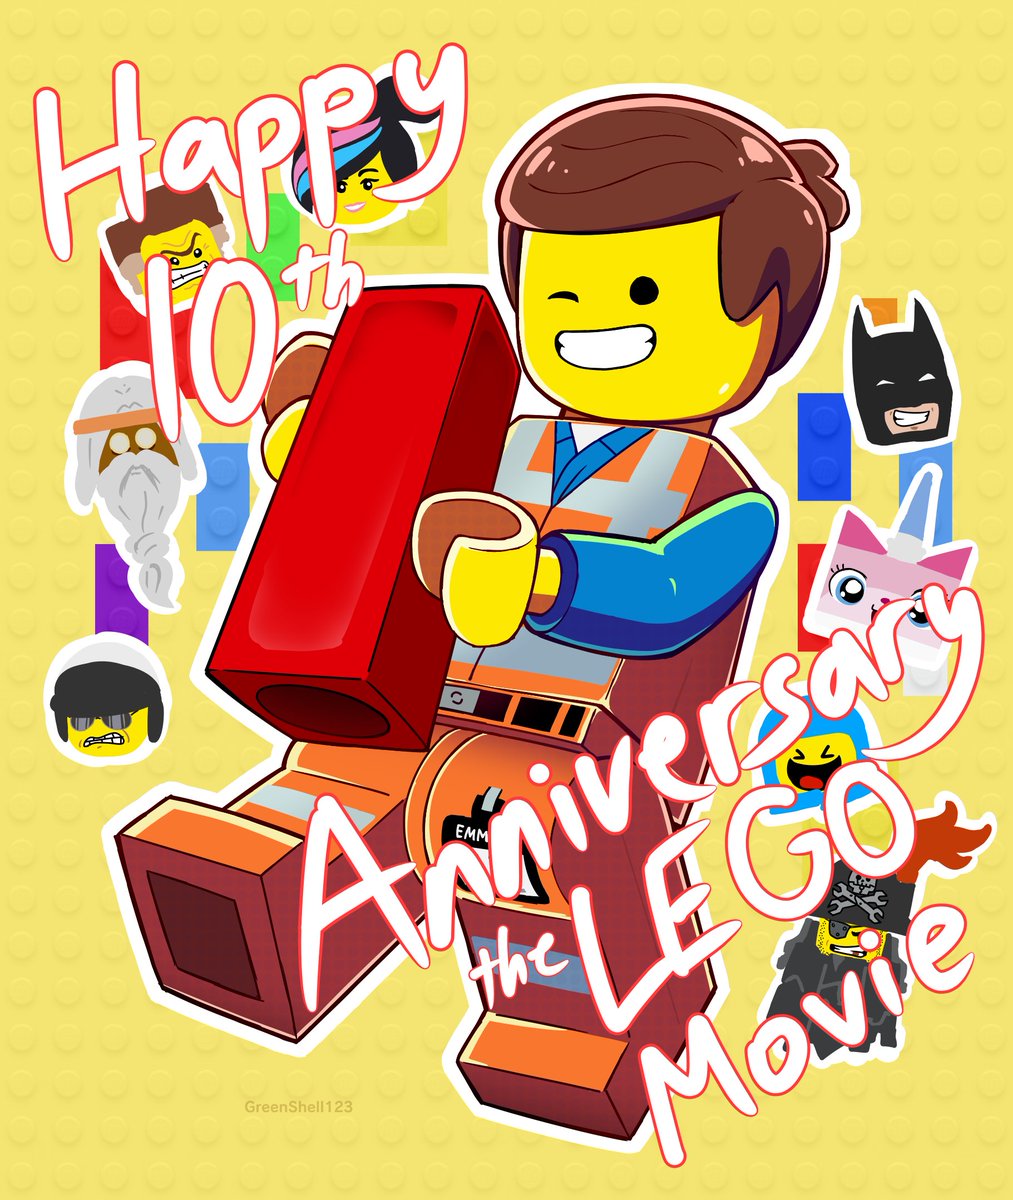 Happy 10th Anniversary to The LEGO Movie!! #TheLegoMovie